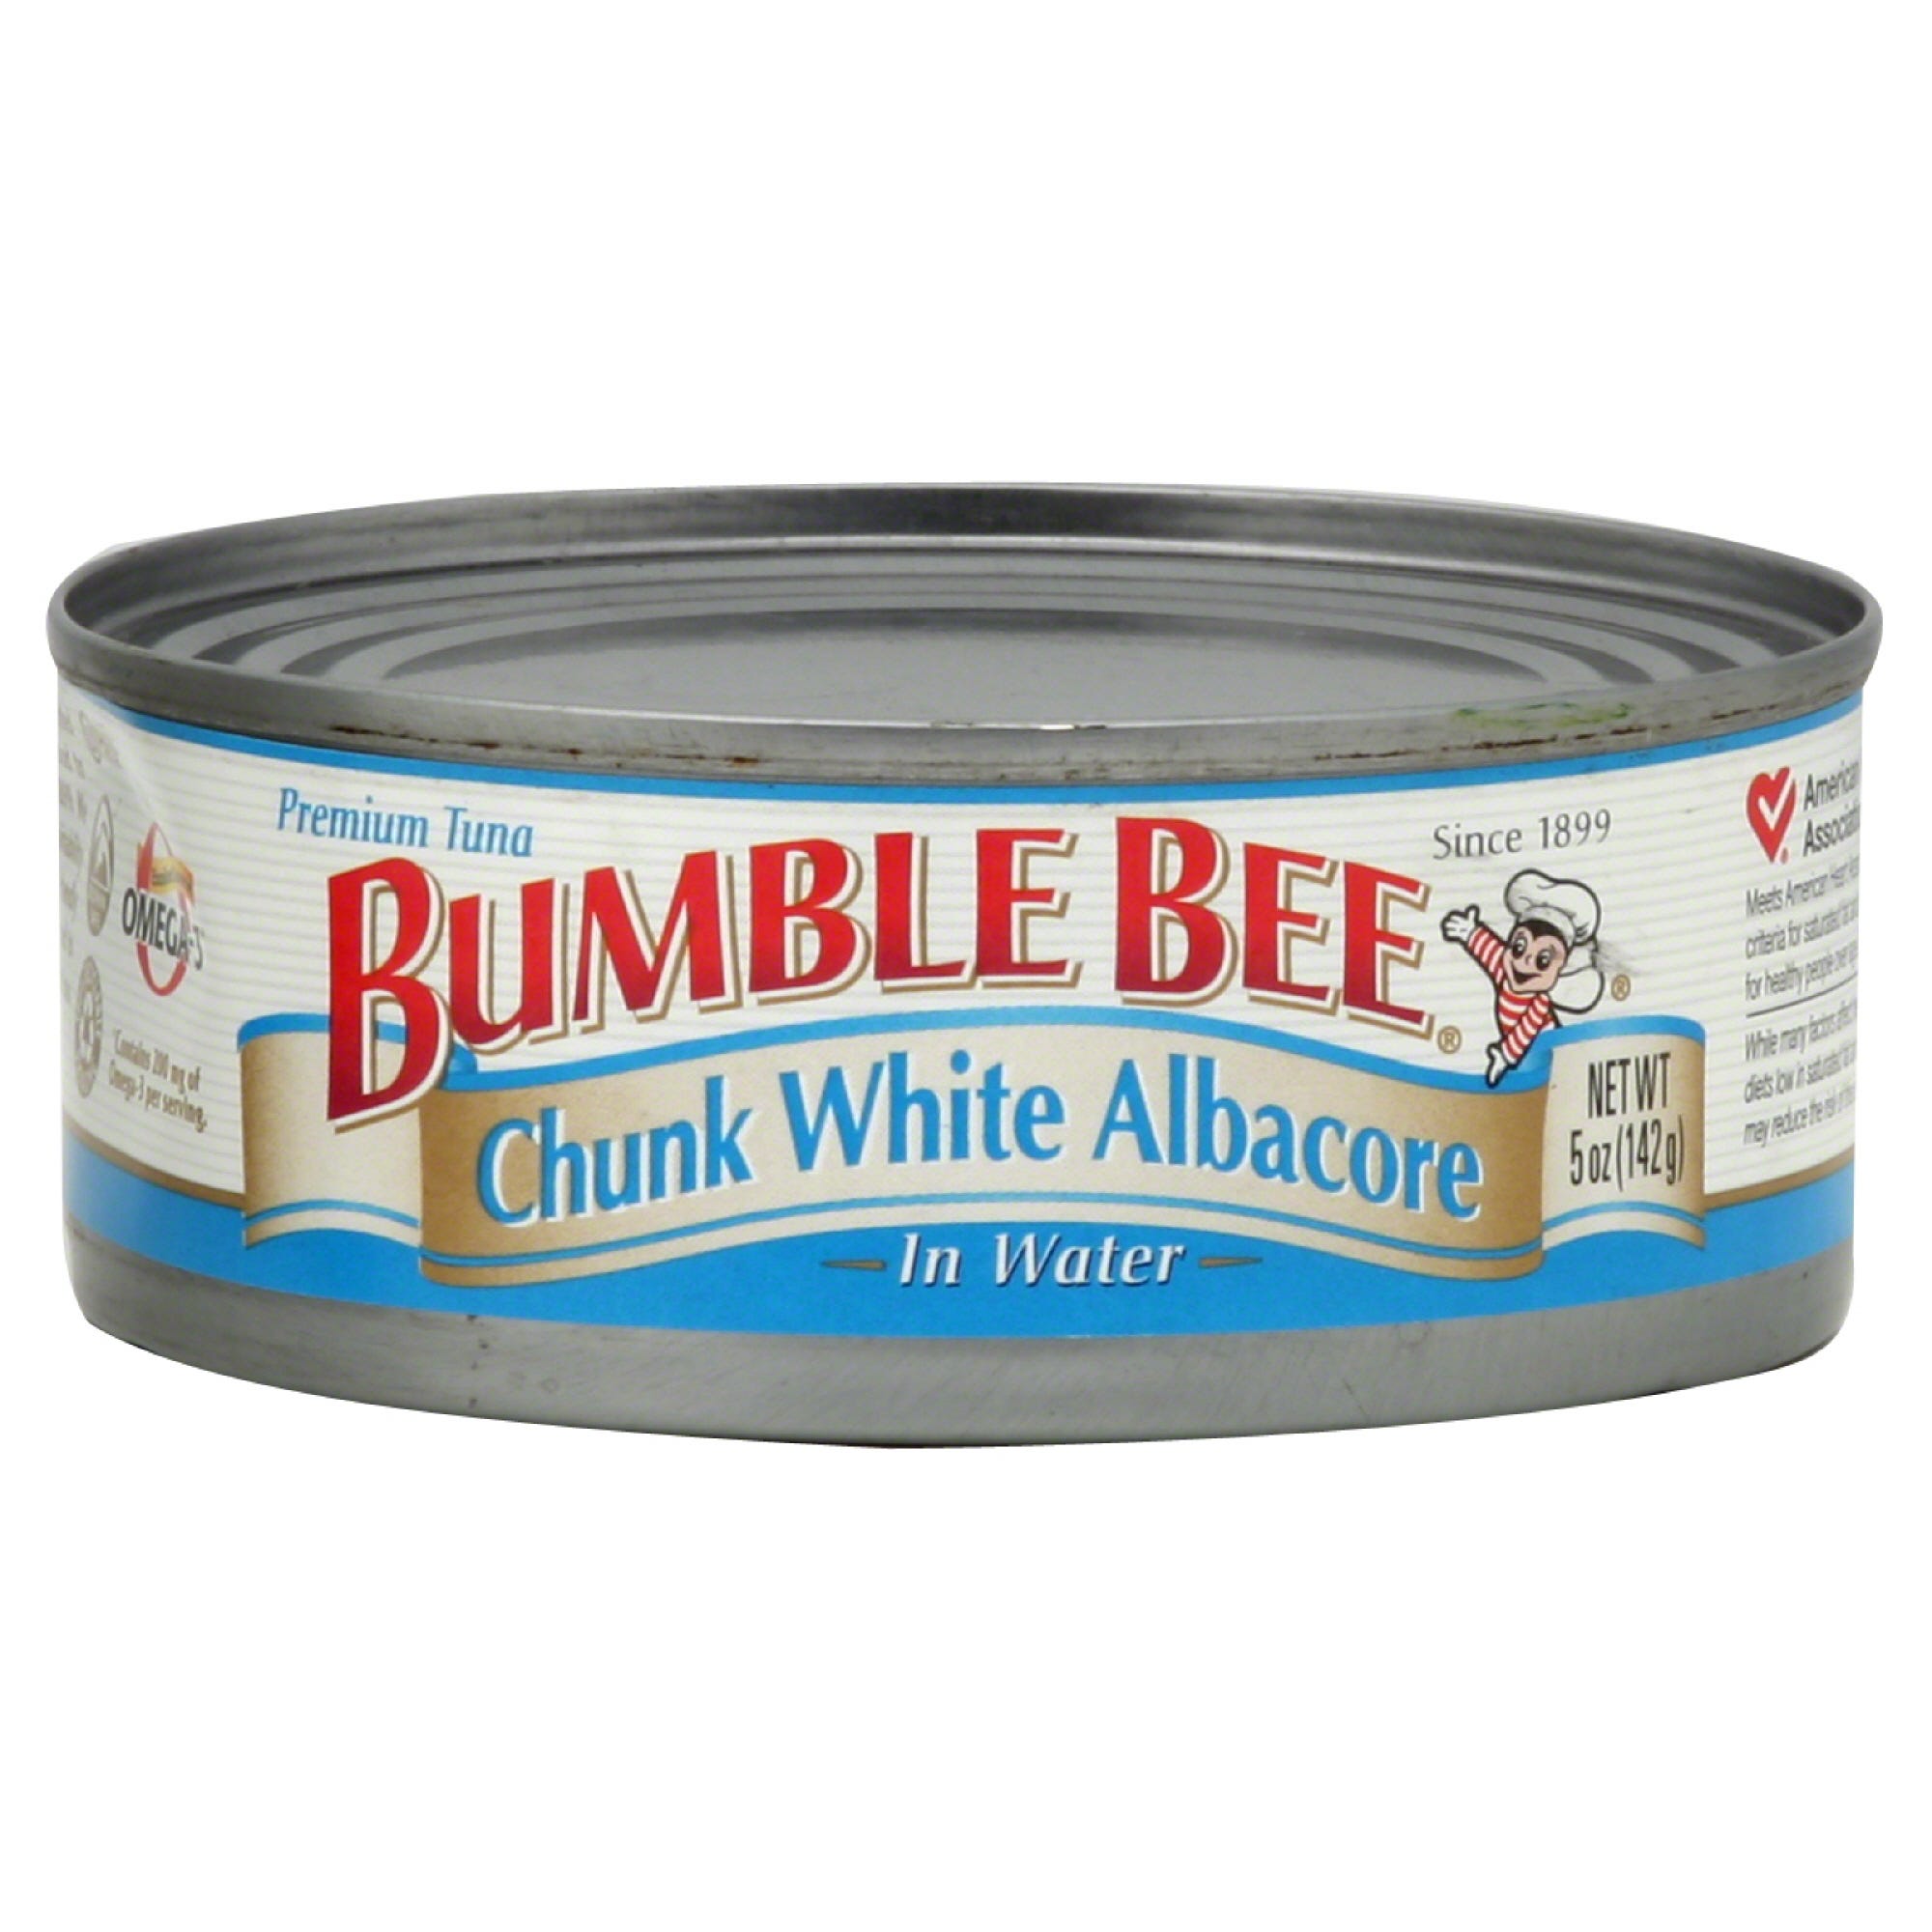 Bumble Bee Tuna, Premium Chunk White Albacore - 5 oz